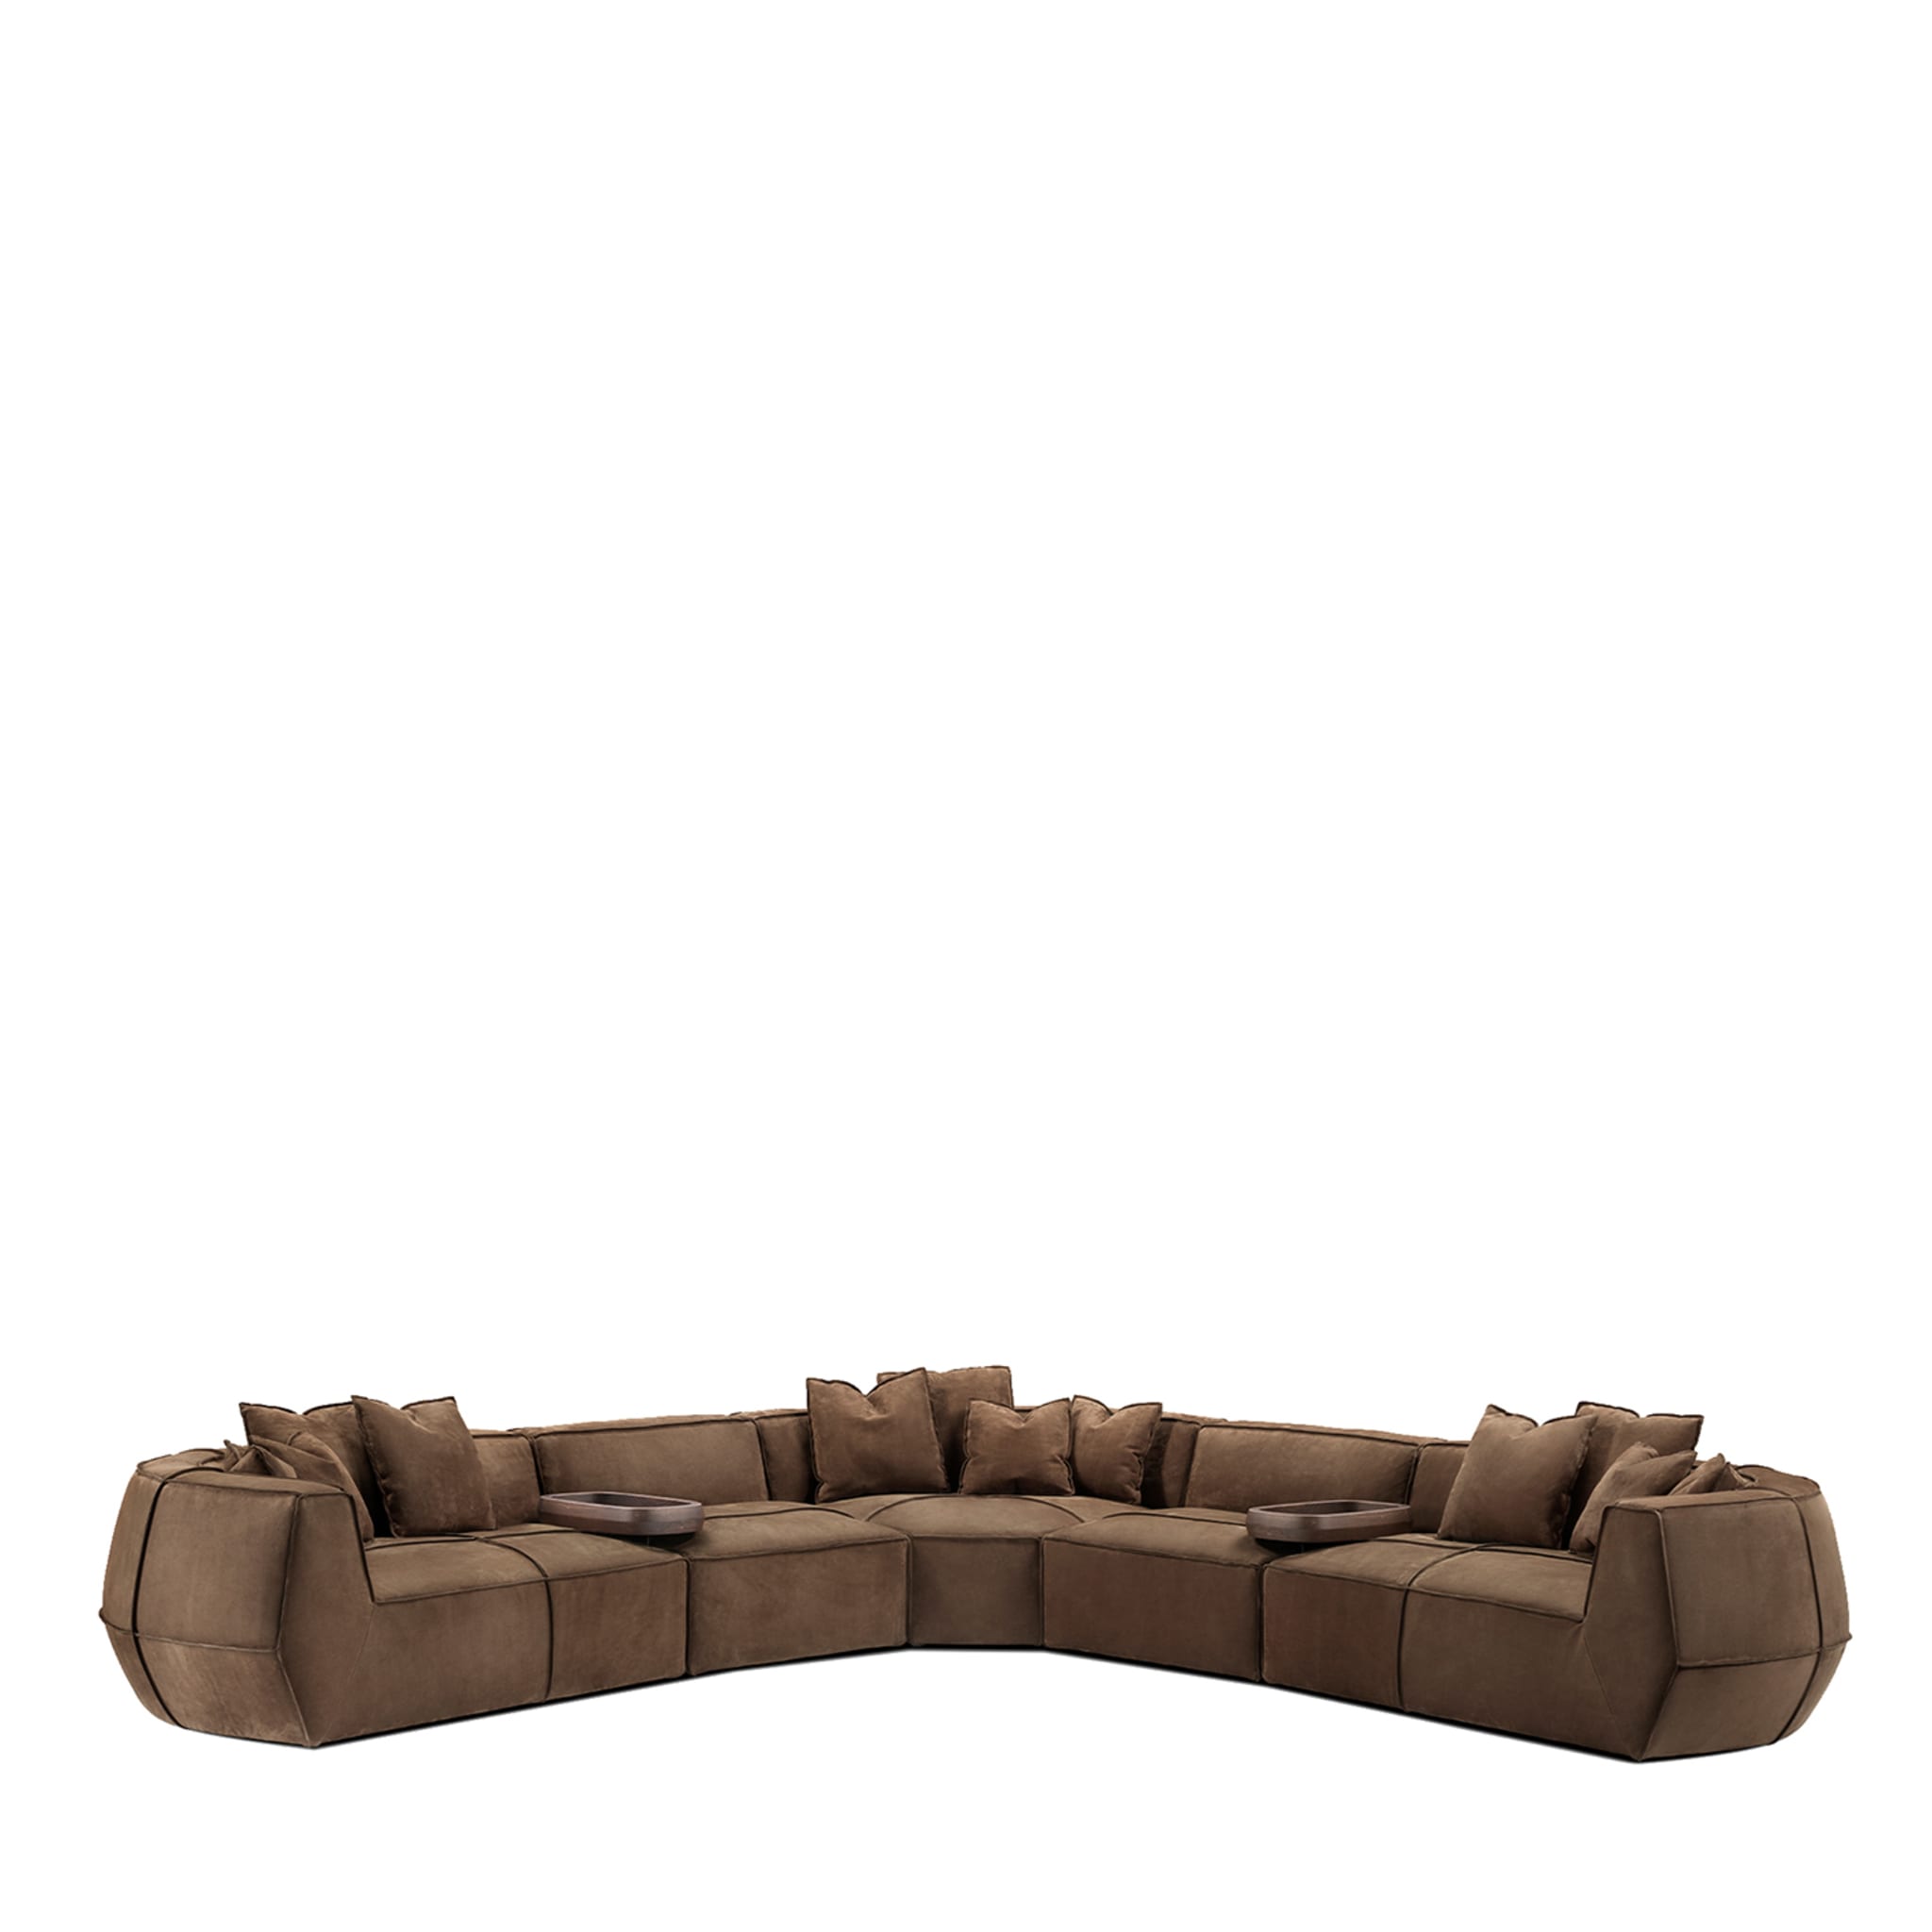 Infinito Brown Leather Sofa by Lorenza Bozzoli - Main view